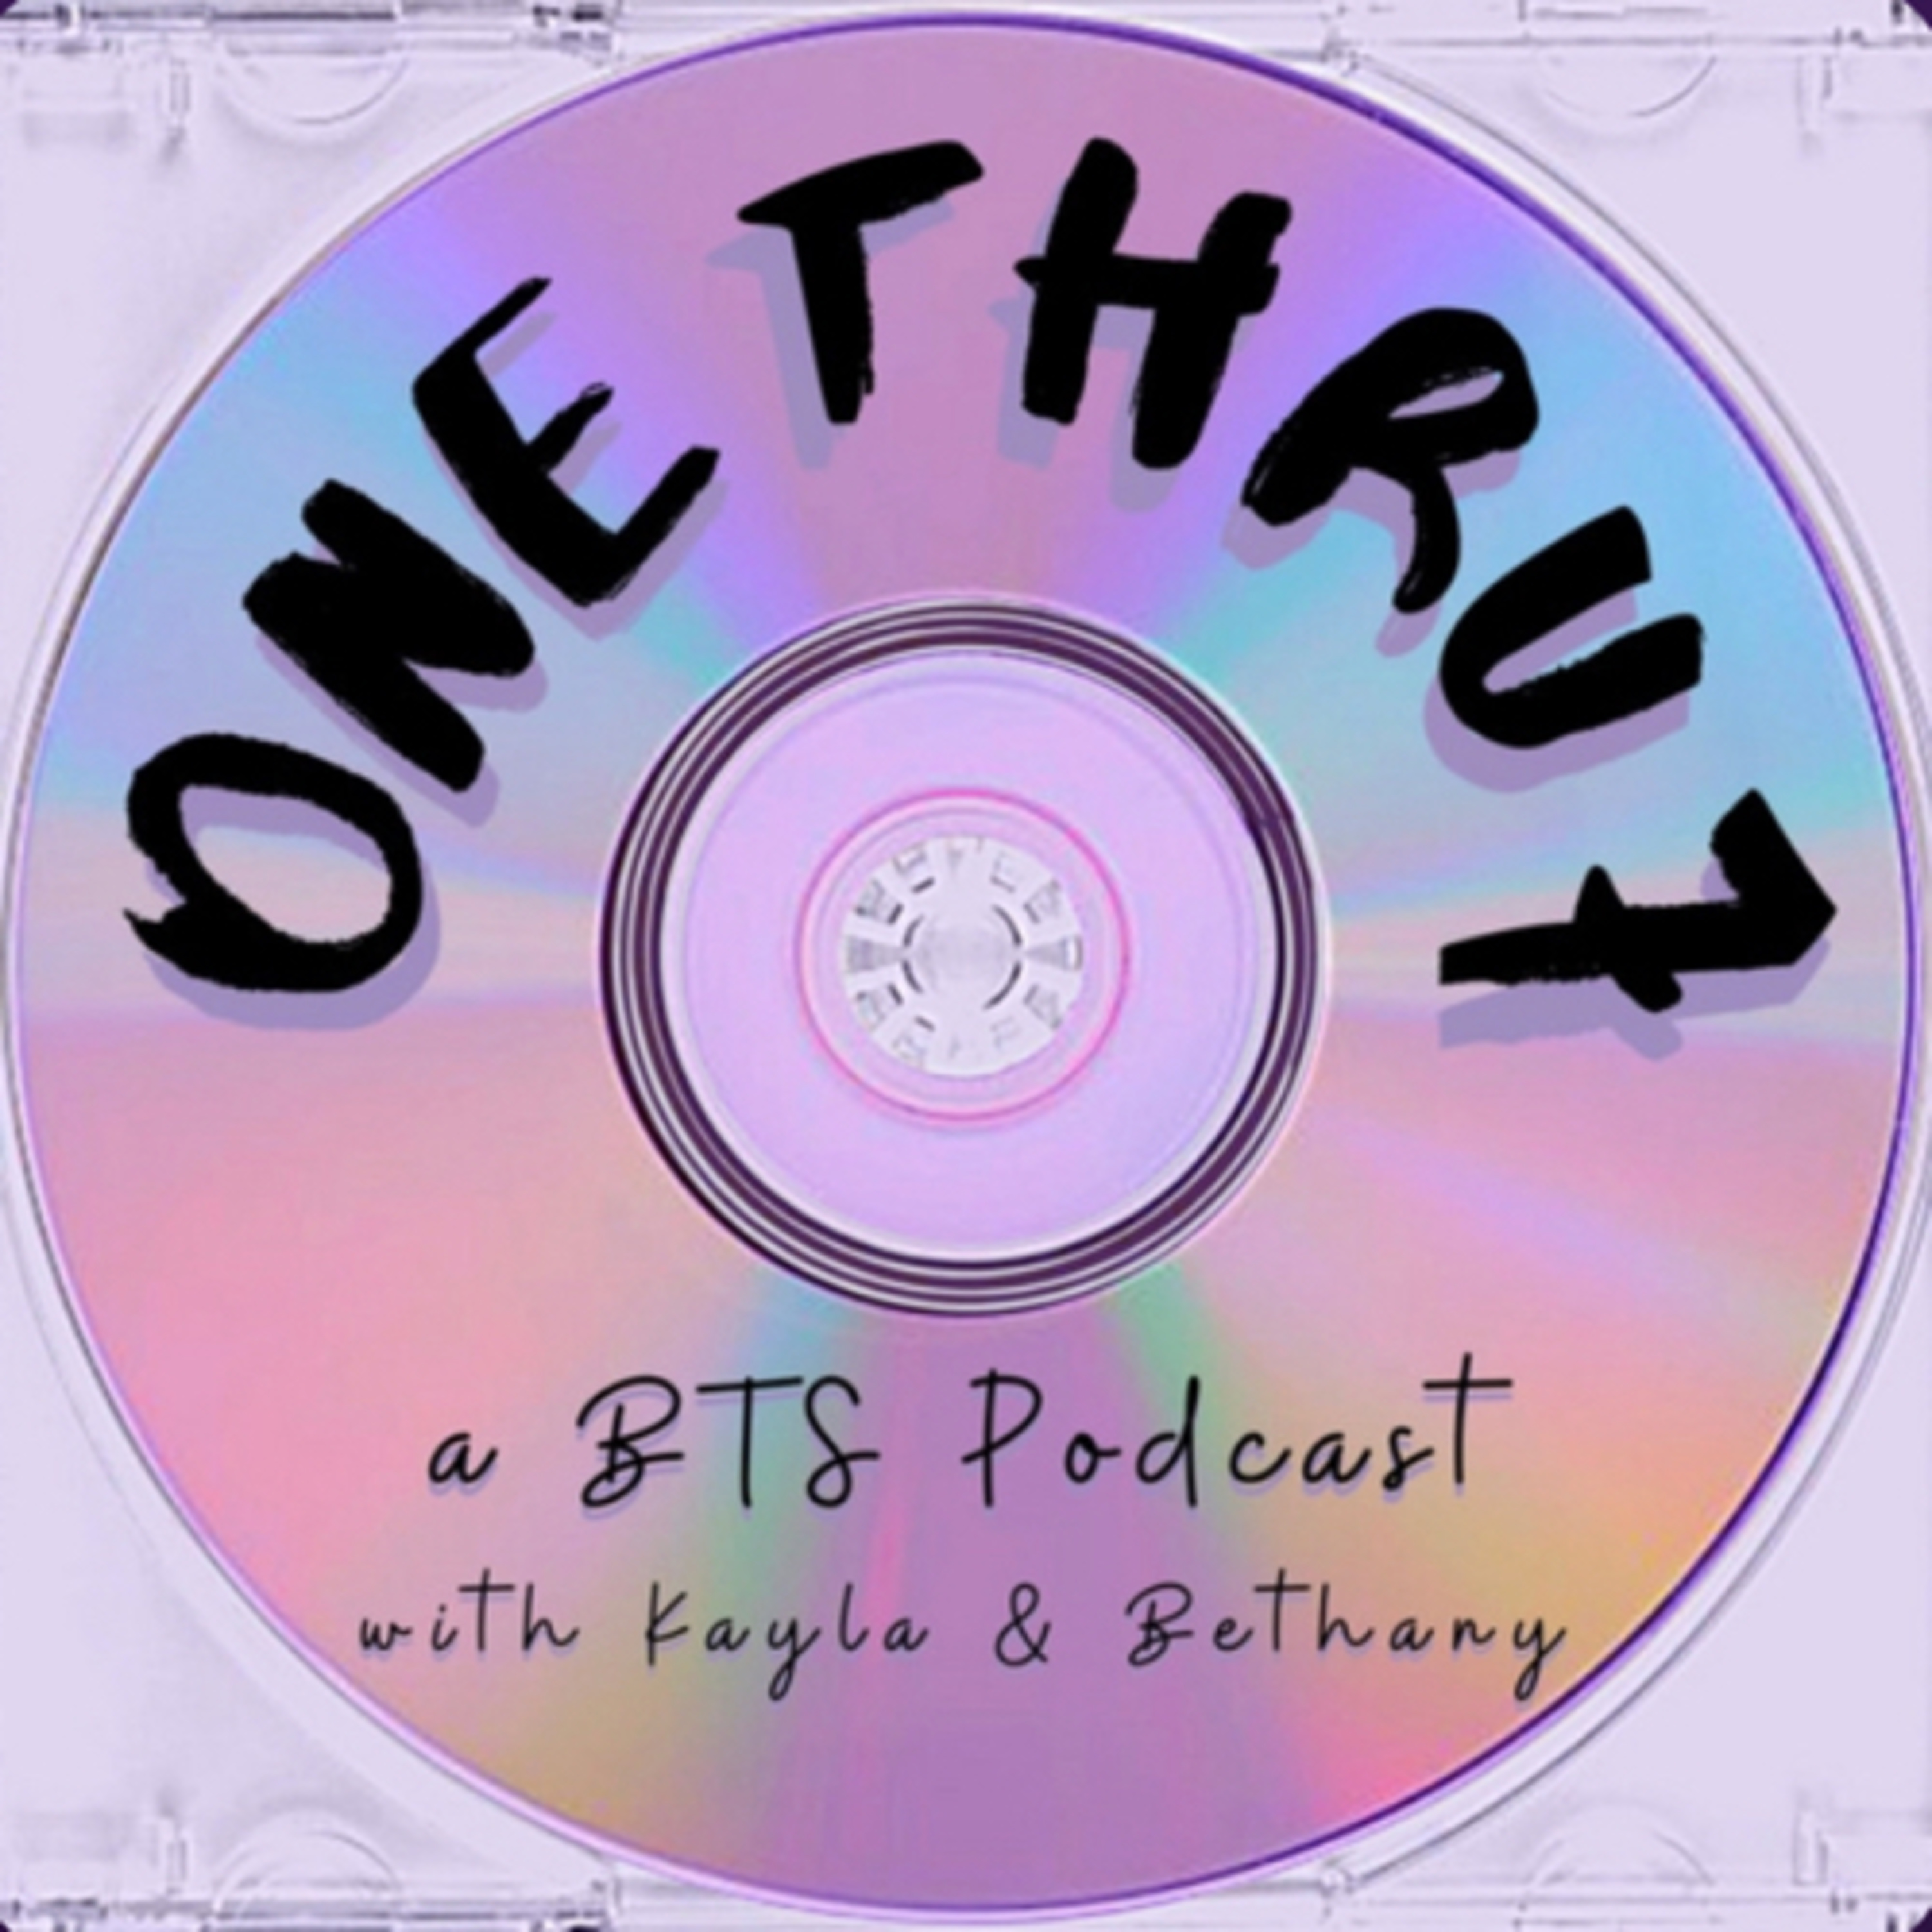 Introducing: One Thru 7